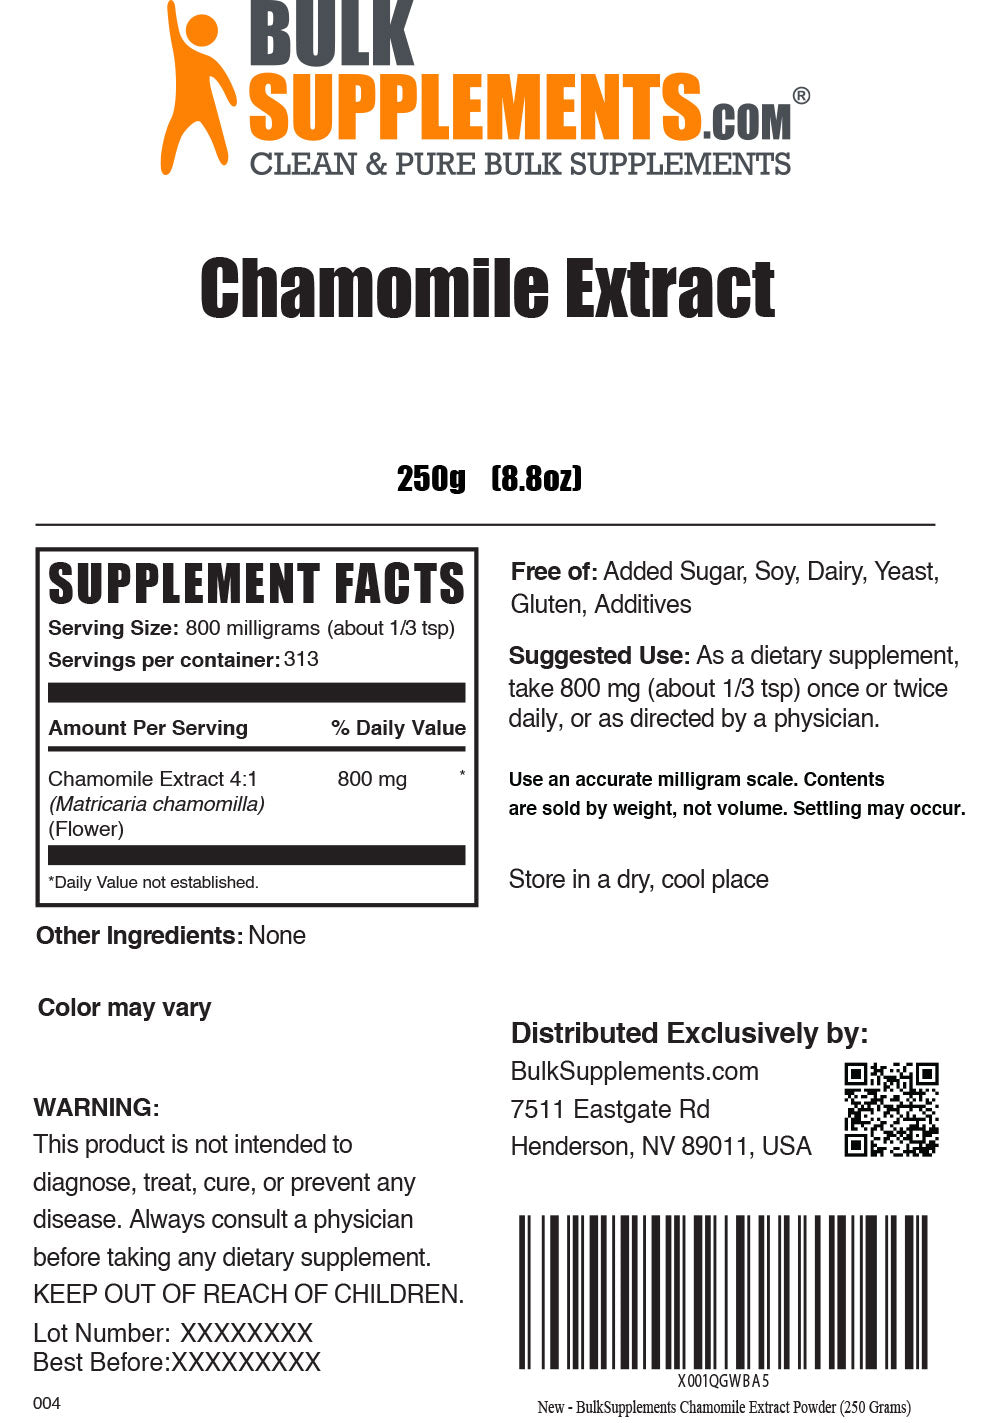 Chamomile Extract powder label 250g